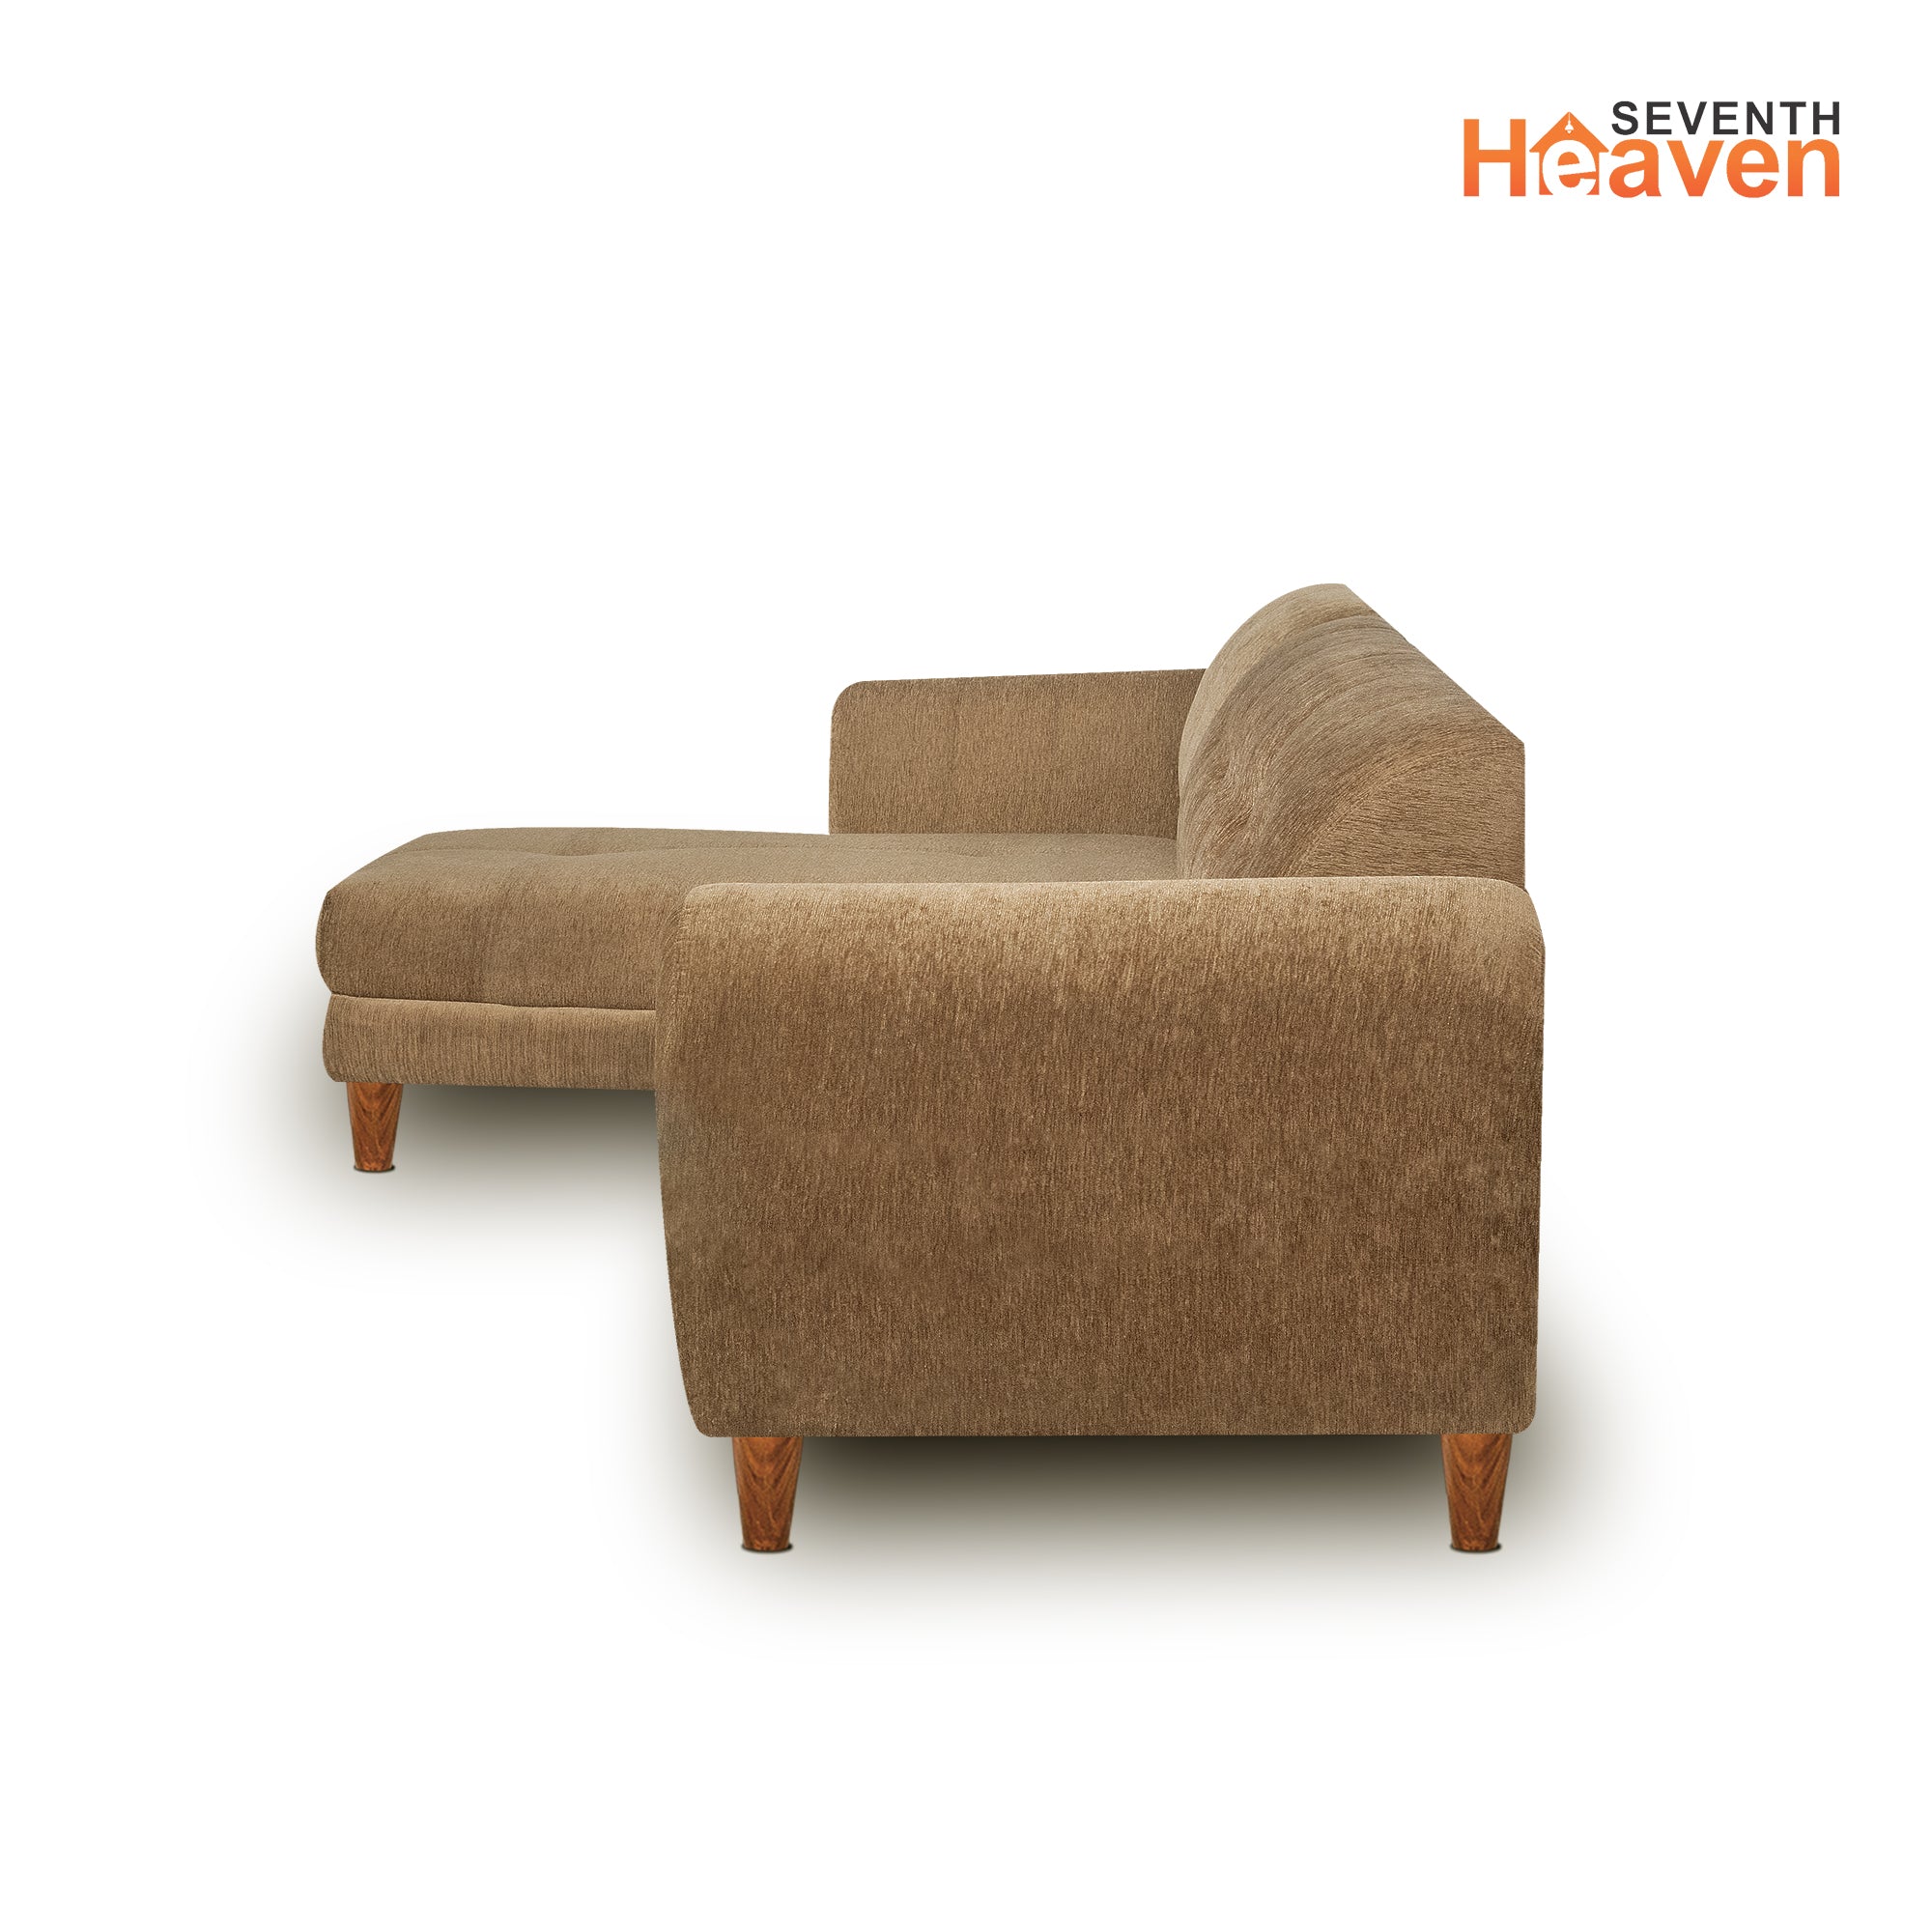 Seventh Heaven Milan 6 Seater Sofa, Chenille Molfino Fabric: 3 Year Warranty Fabric 6 Seater Sofa  (Finish Color - Beige, DIY(Do-It-Yourself))